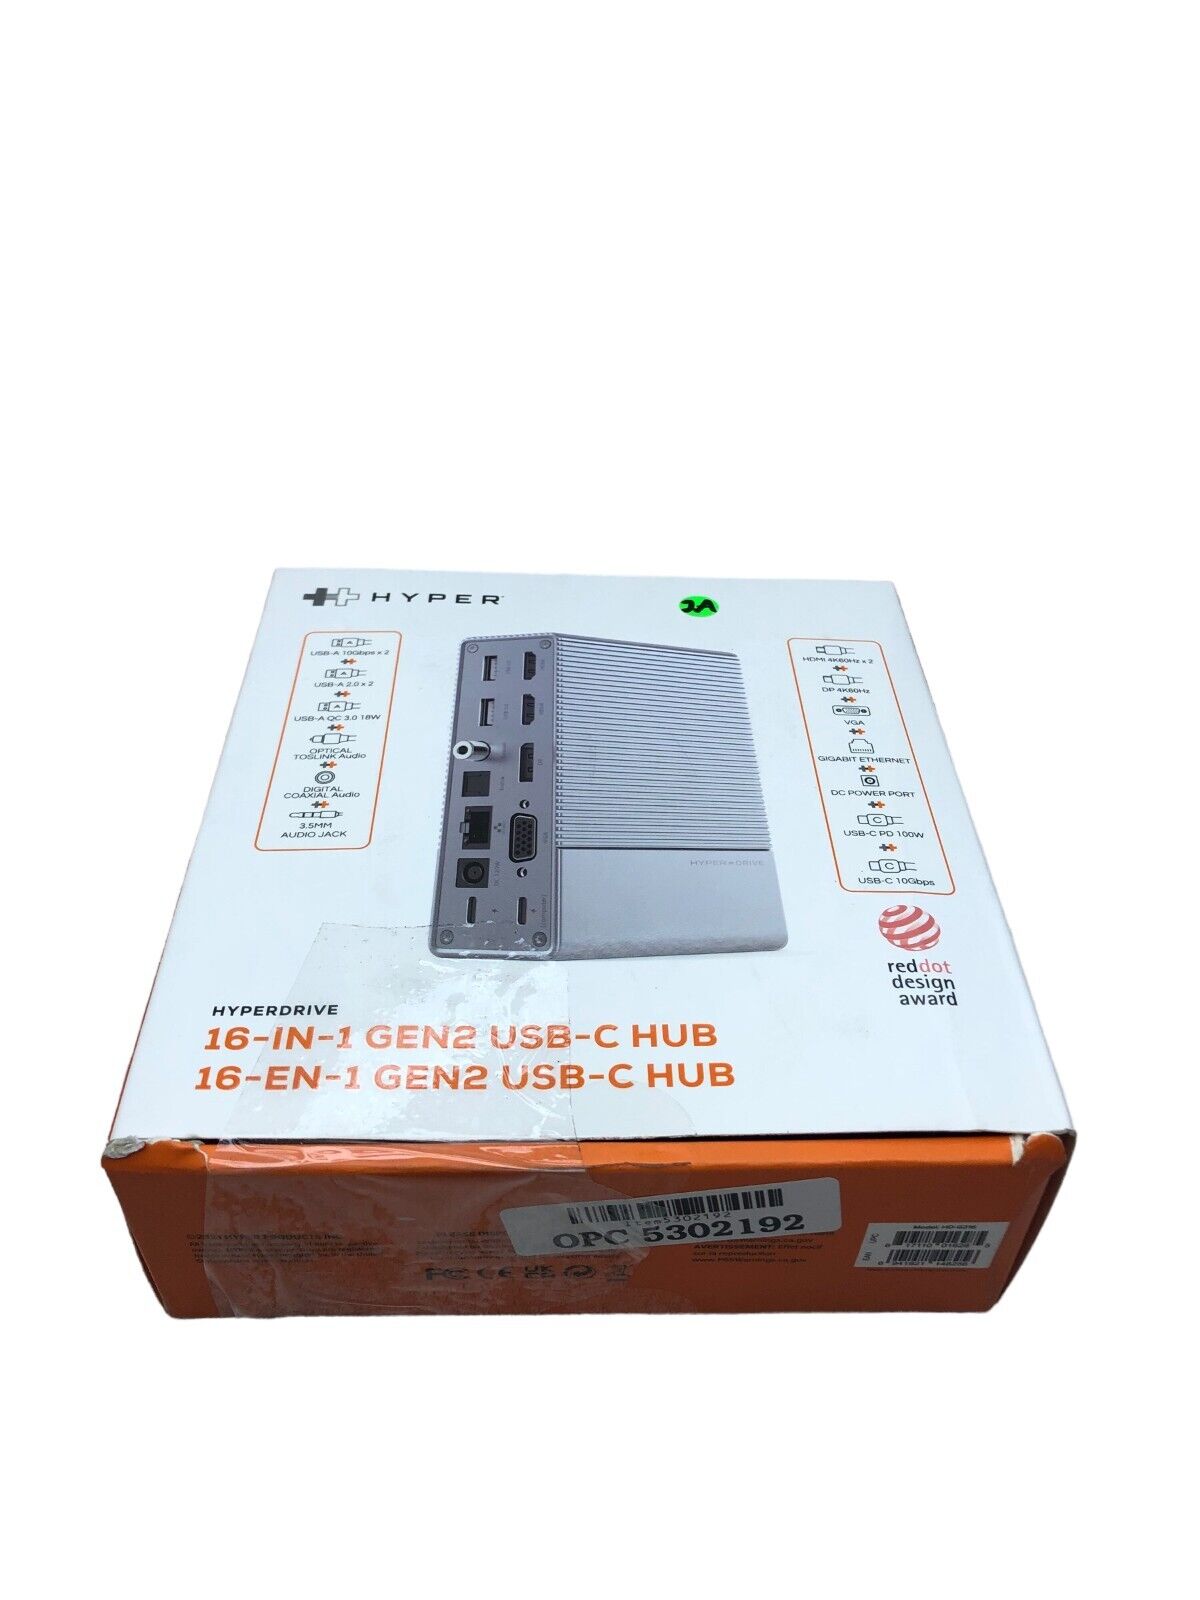 HYPERDRIVE HD-G216 16-In-1 GEN2 USB-C HUB DOCKING STATION - SILVER